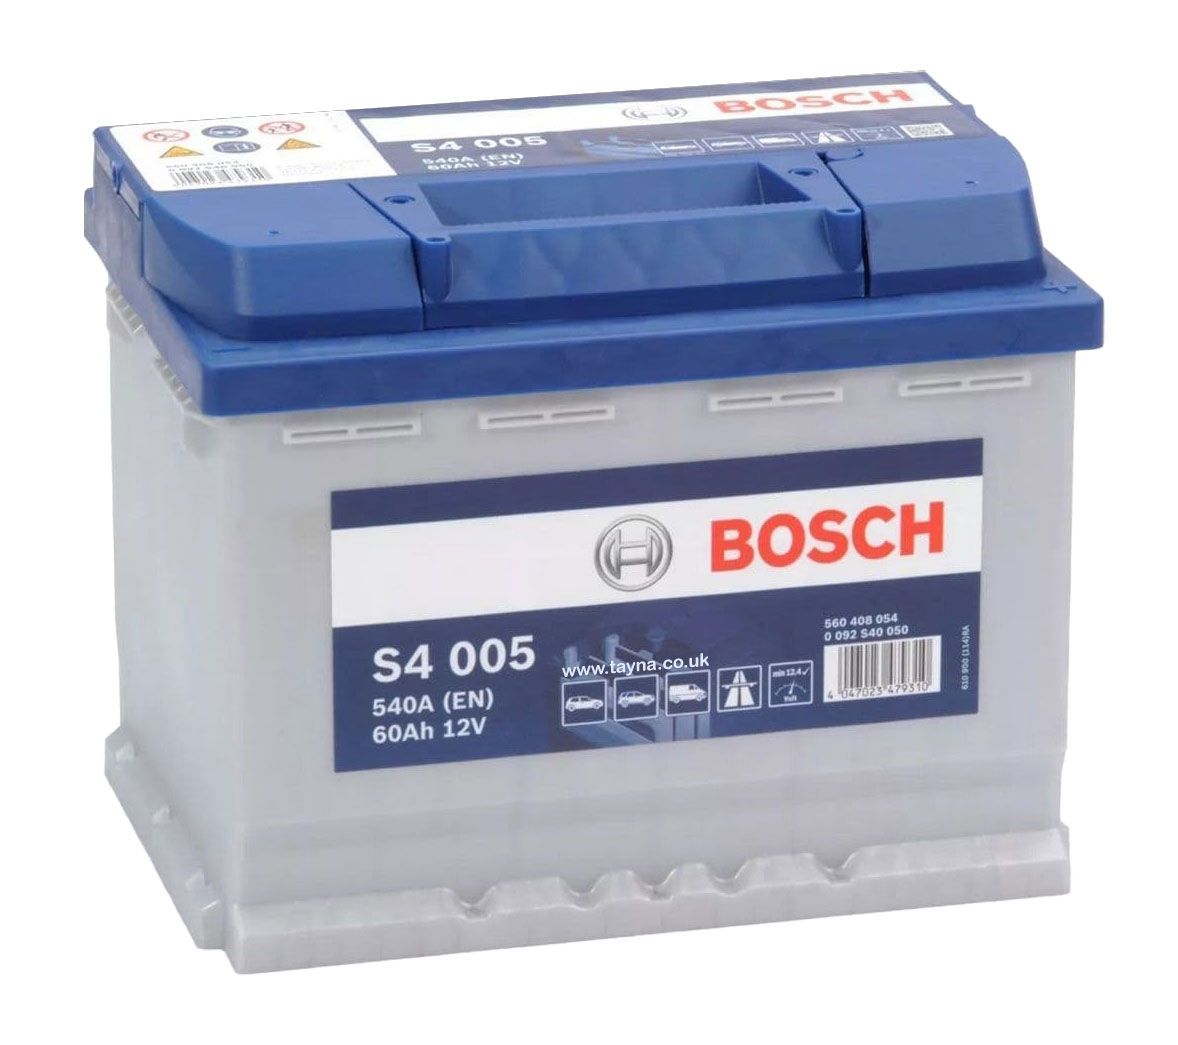 https://images.tayna.com/prod-images/1200/Bosch/Bosch_Image_S4005.jpg